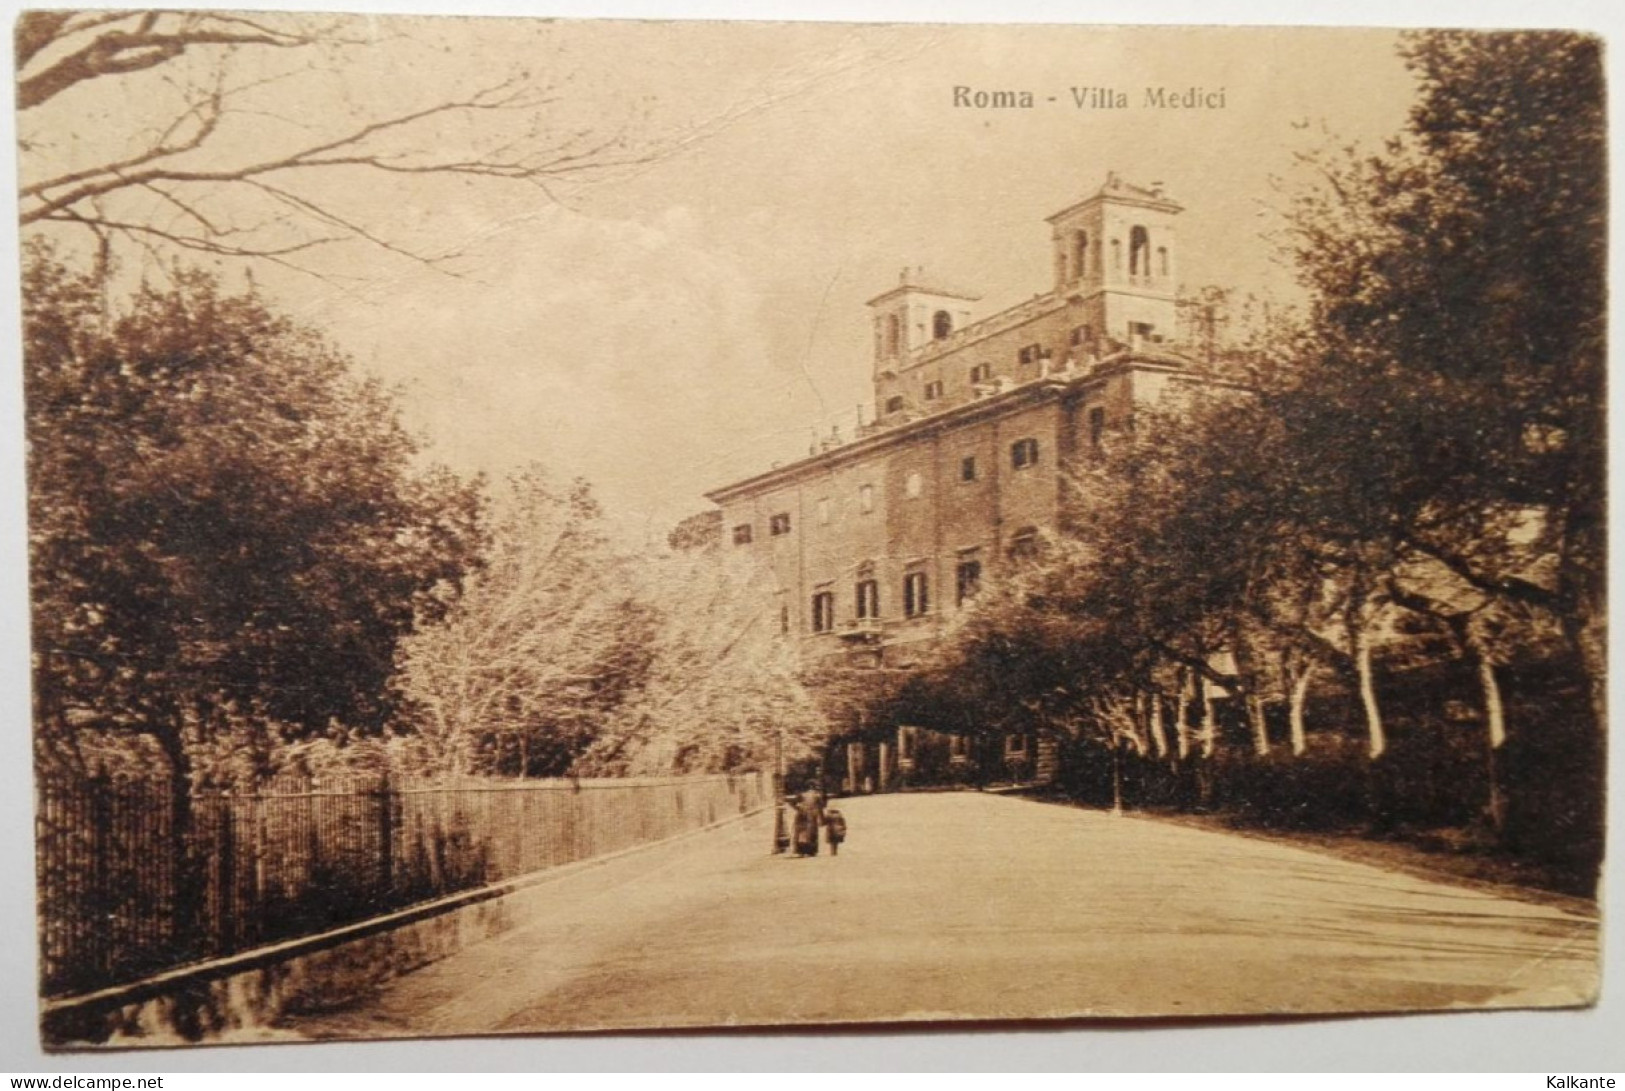 ROMA - 1918 - Villa Medici - Andere Monumente & Gebäude